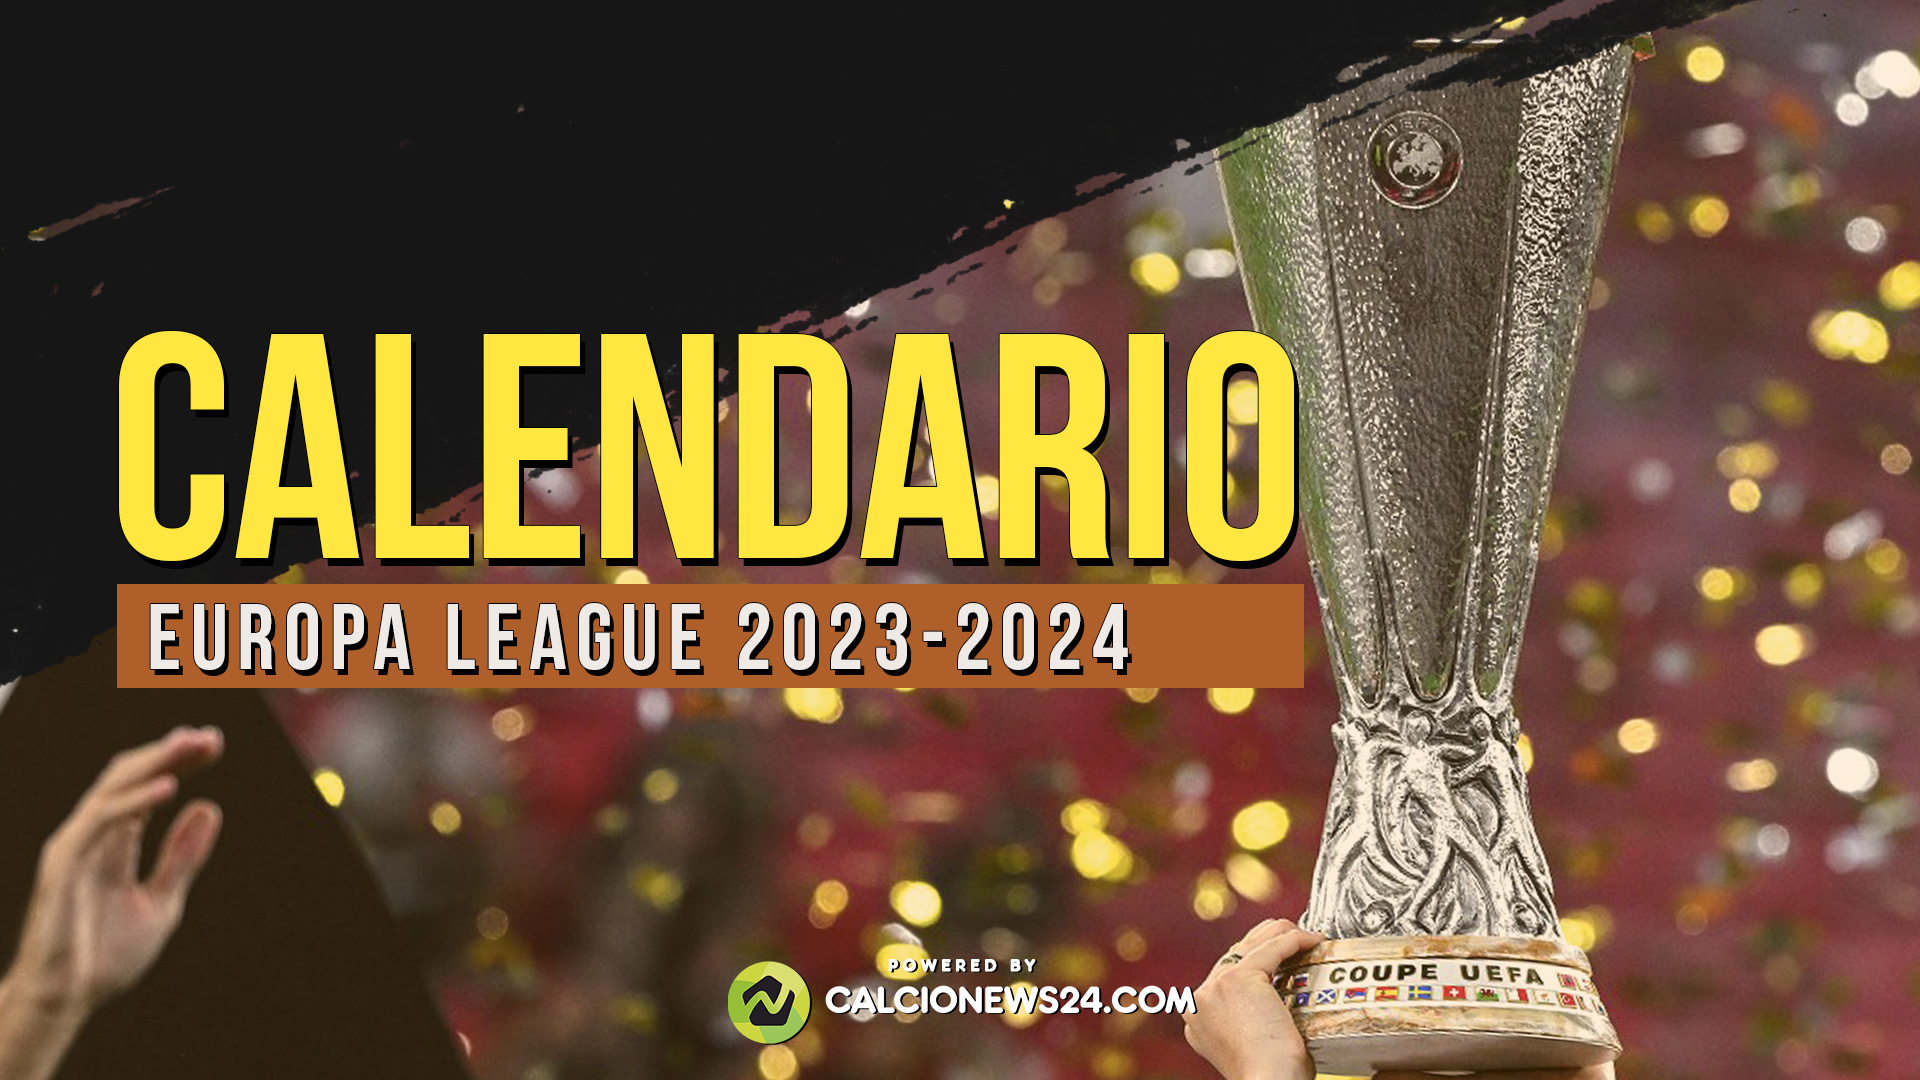 Europa League 2023/2024